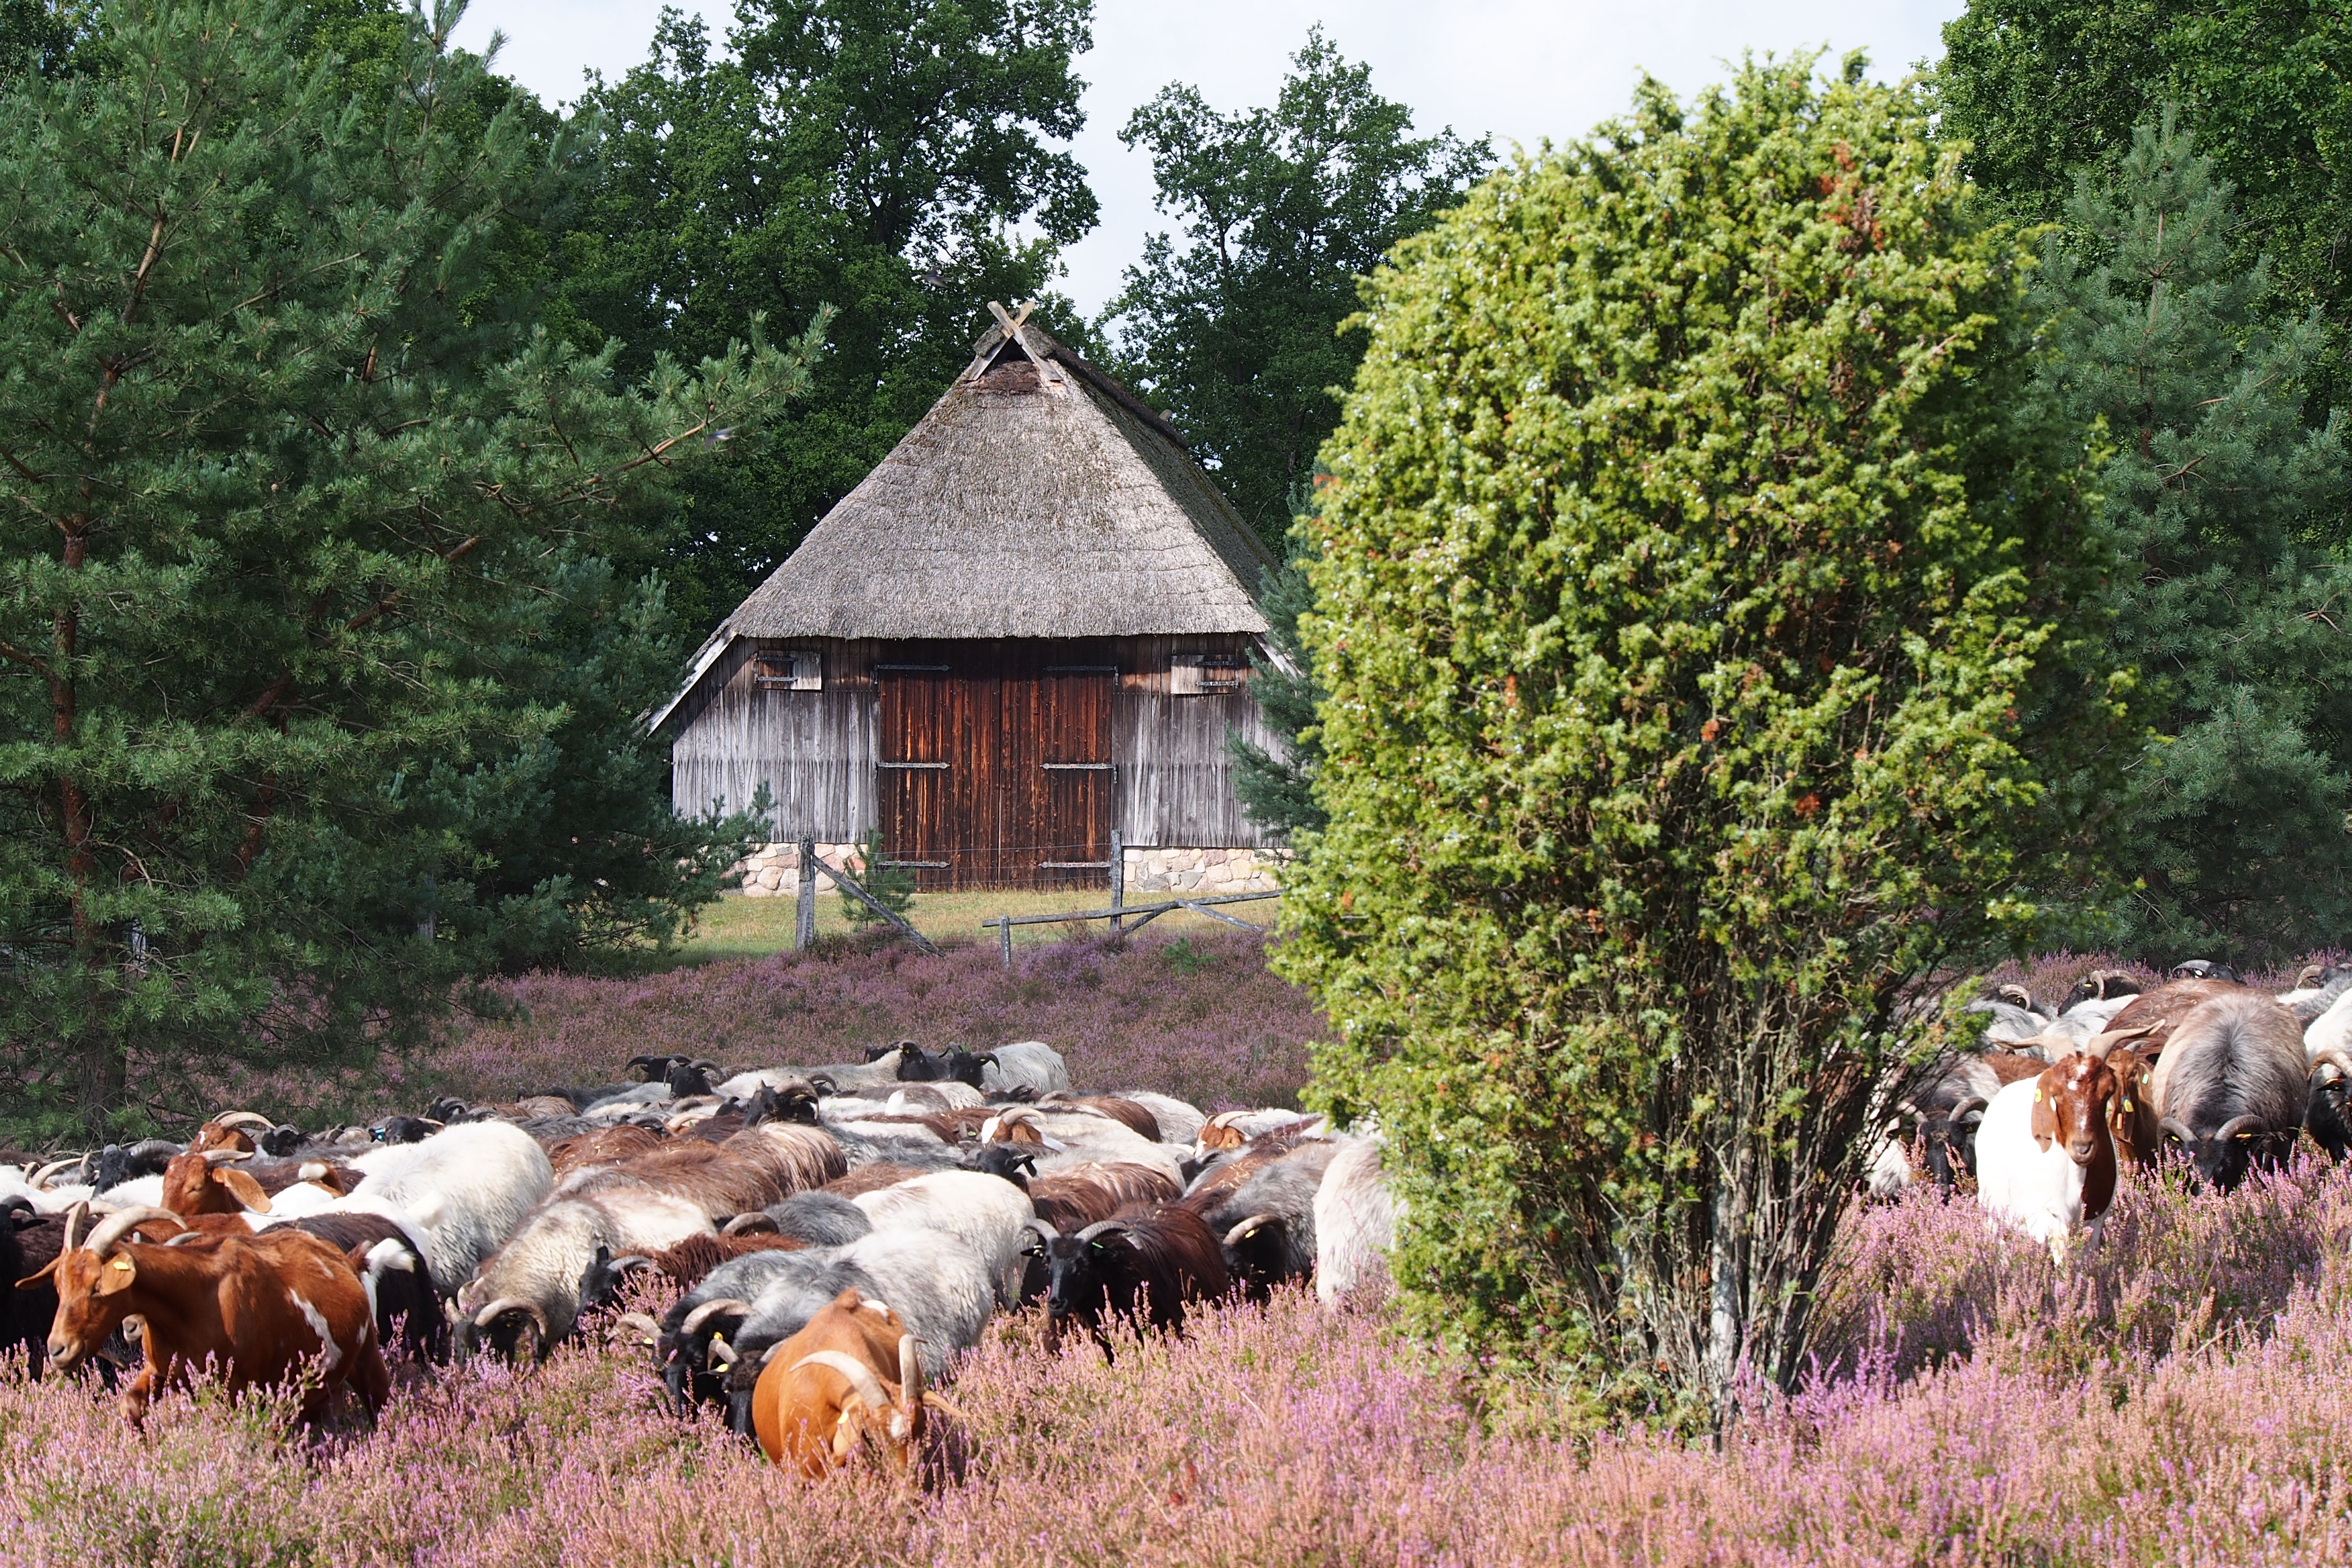 Heidschnucken flock in flowering heather in front of sheep shed | Photo: VNP Stiftung Naturschutzpark Lüneburger Heide